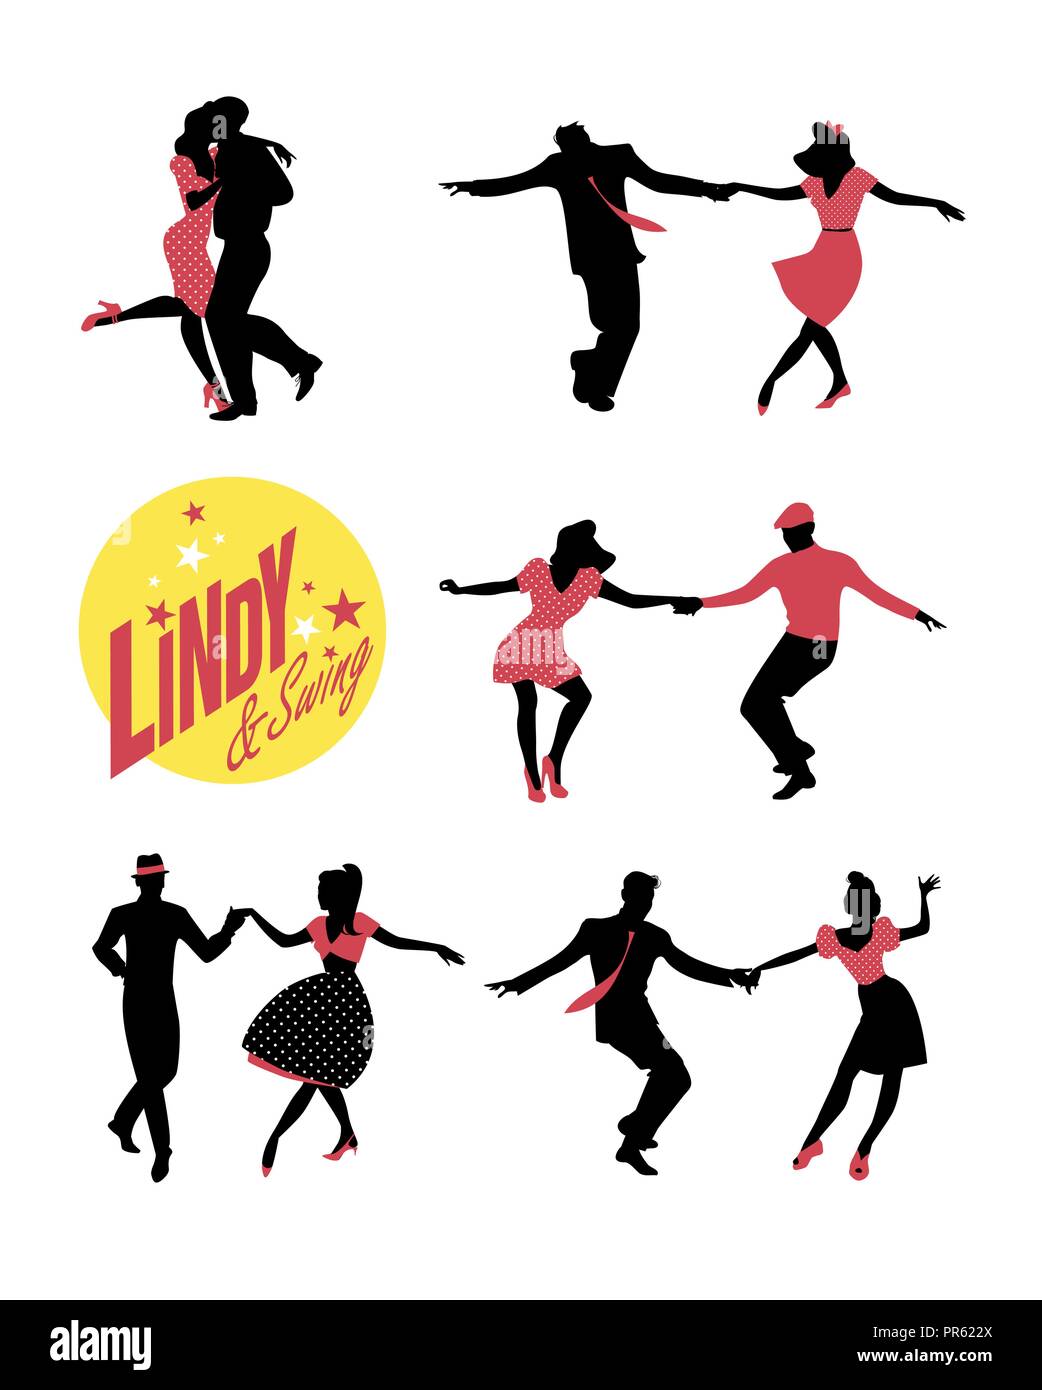 1940s swing dancer Stock Vector Images - Alamy